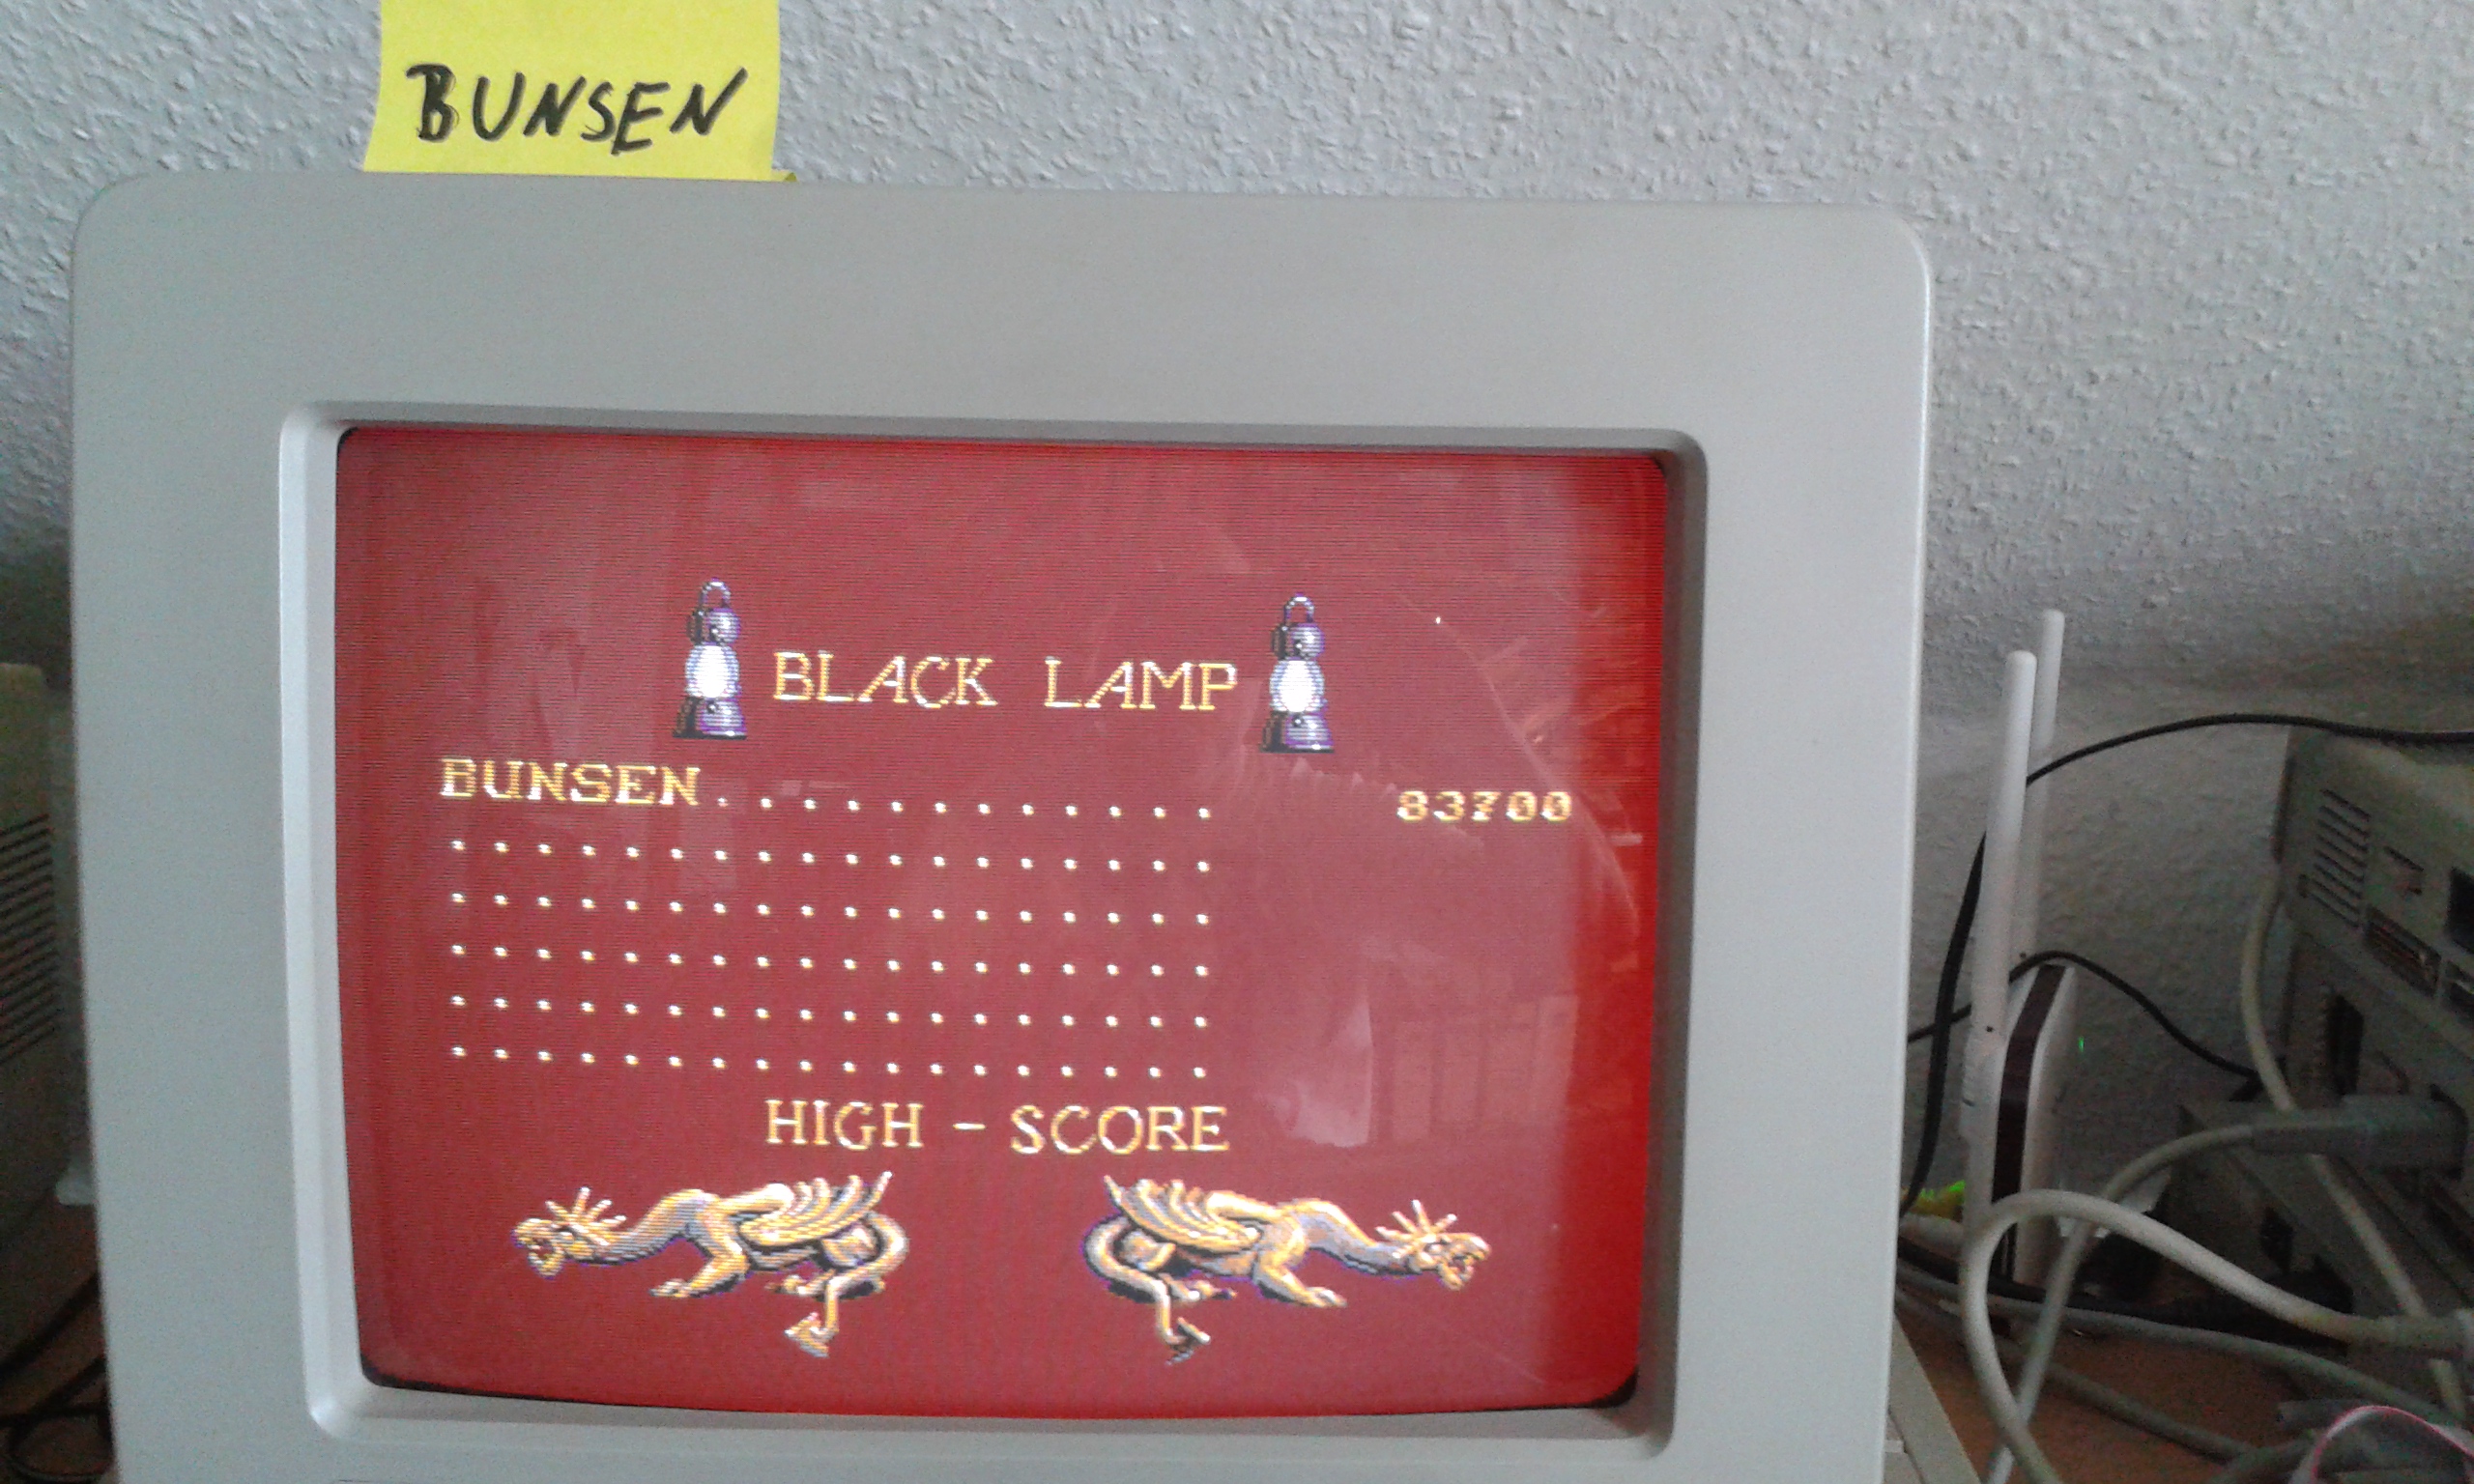 Black Lamp 83,700 points